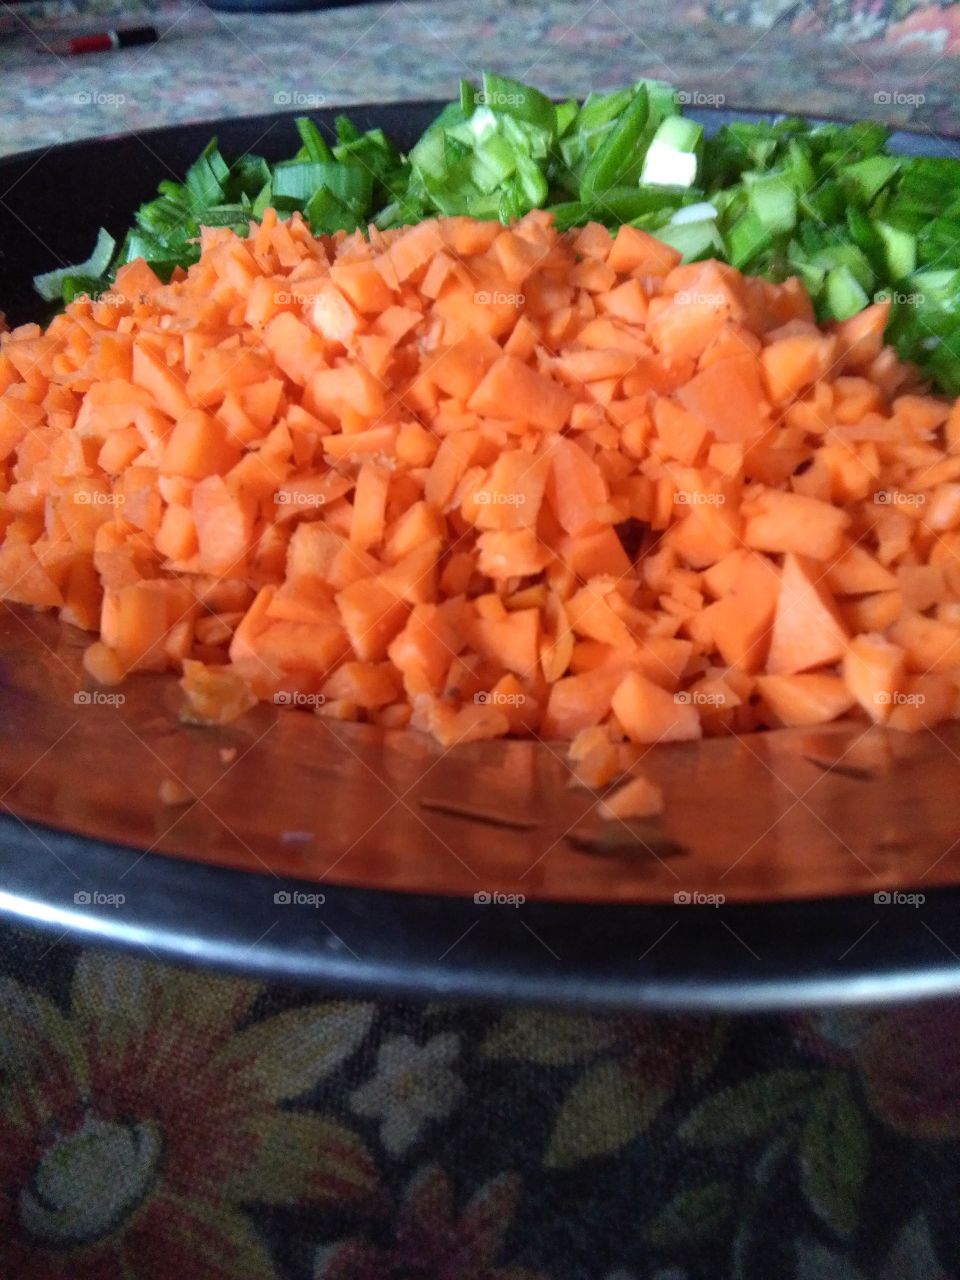 Carrots and leeks